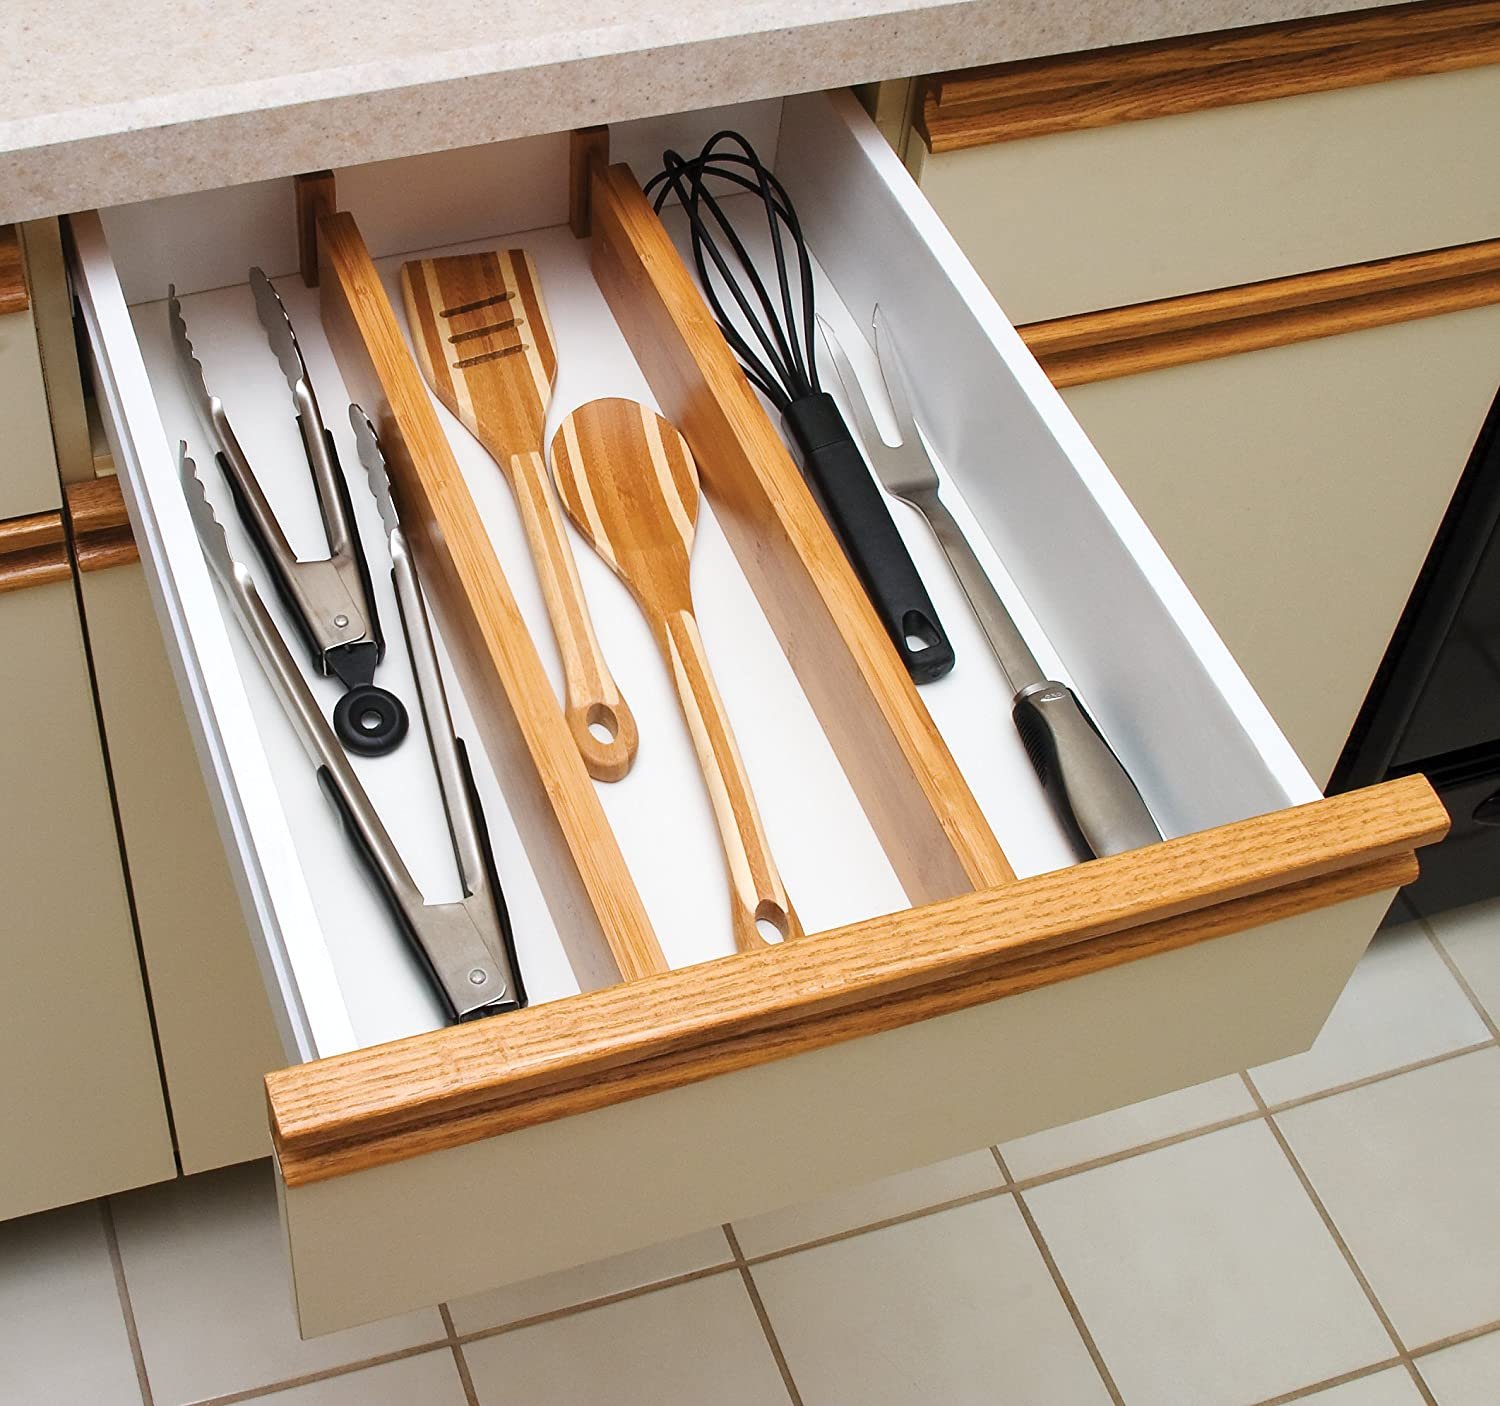 Bamboo adjustable kitchen drawer dividers